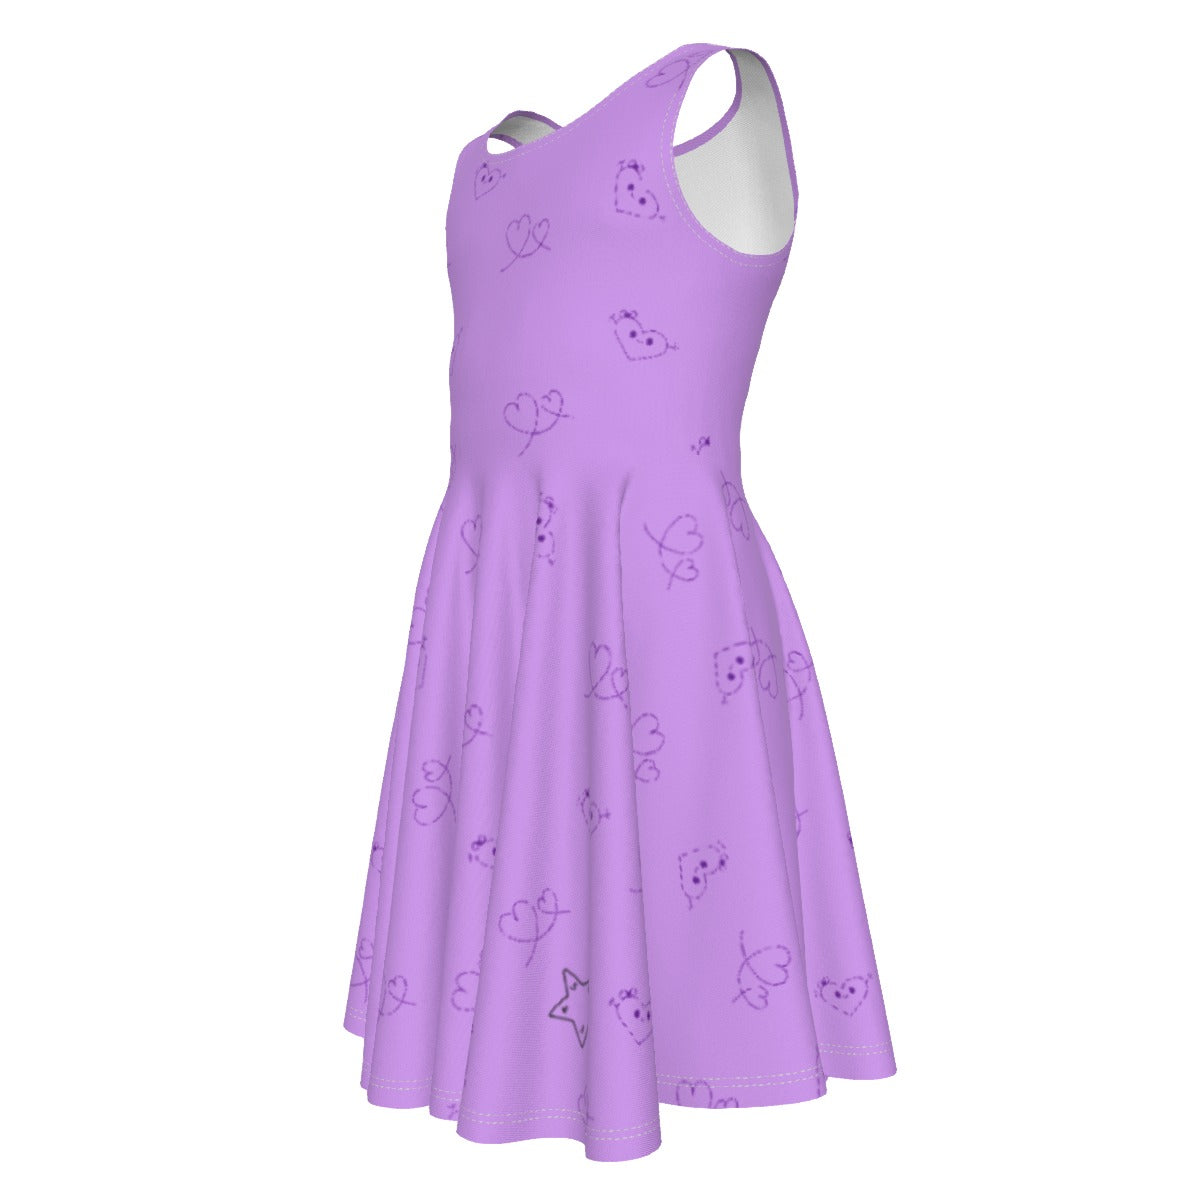 Girls Purple Heart Dress - Clothes that Calm